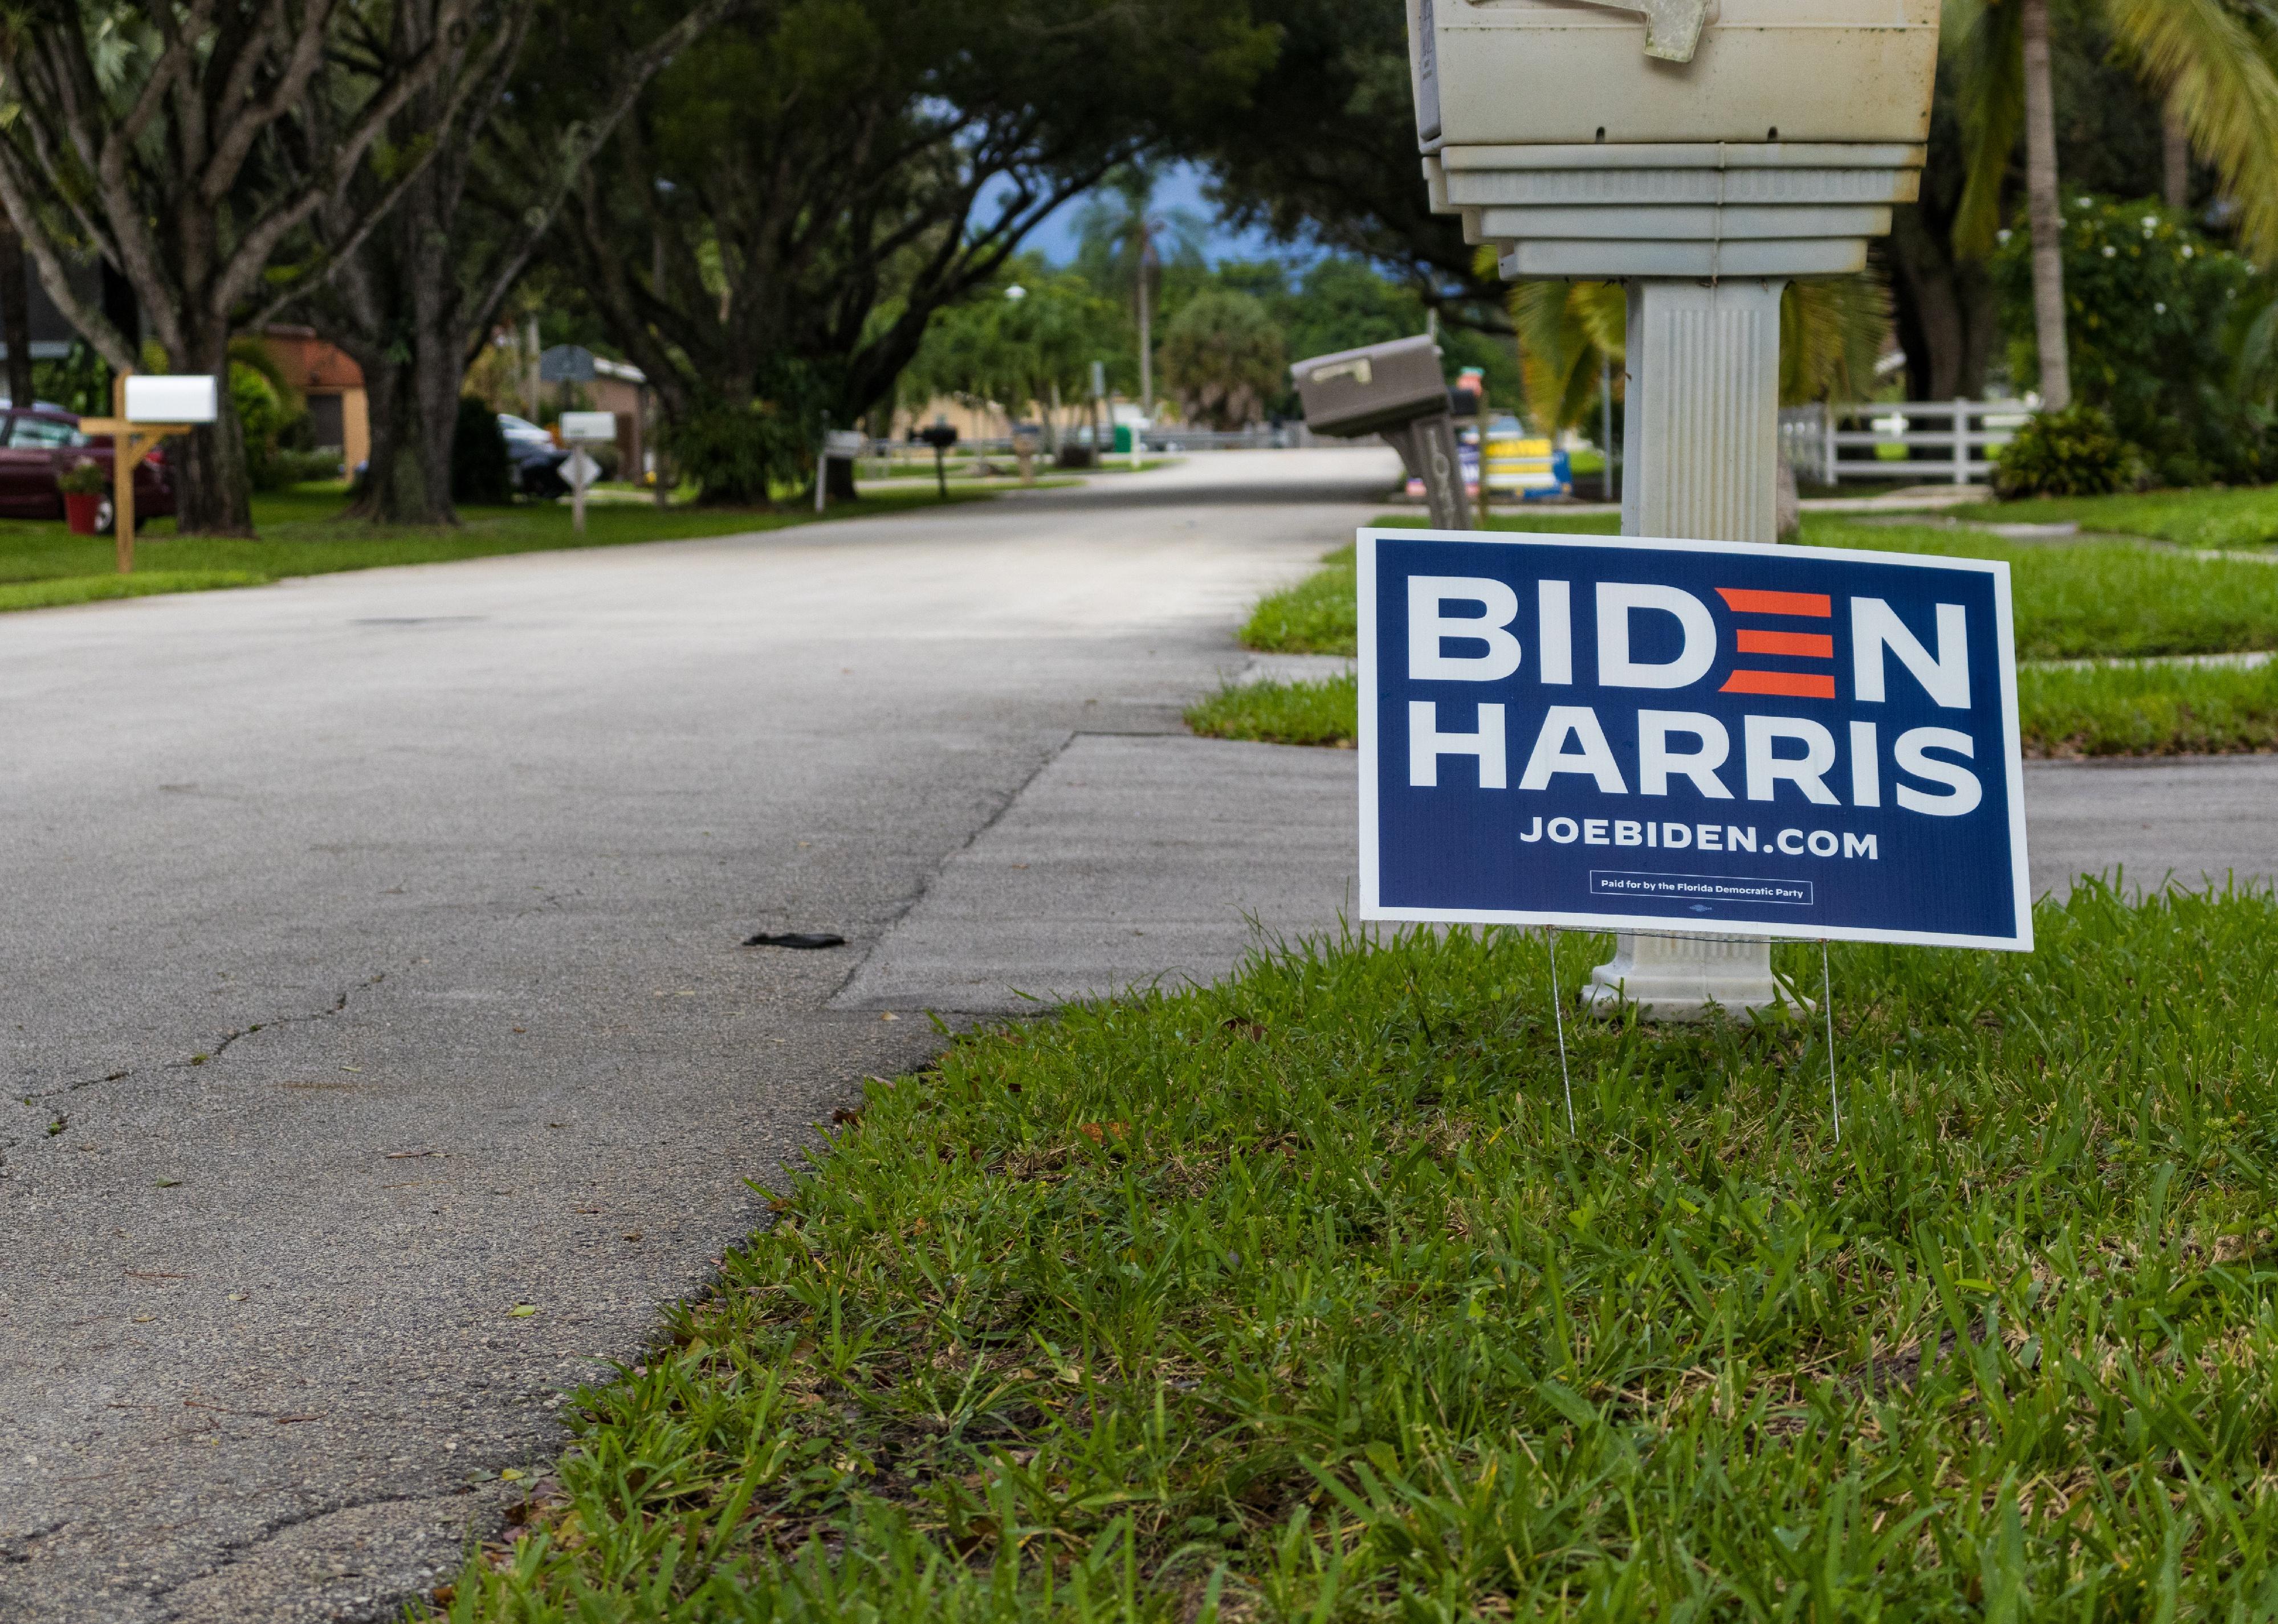 Biden yard sign against a mailbox